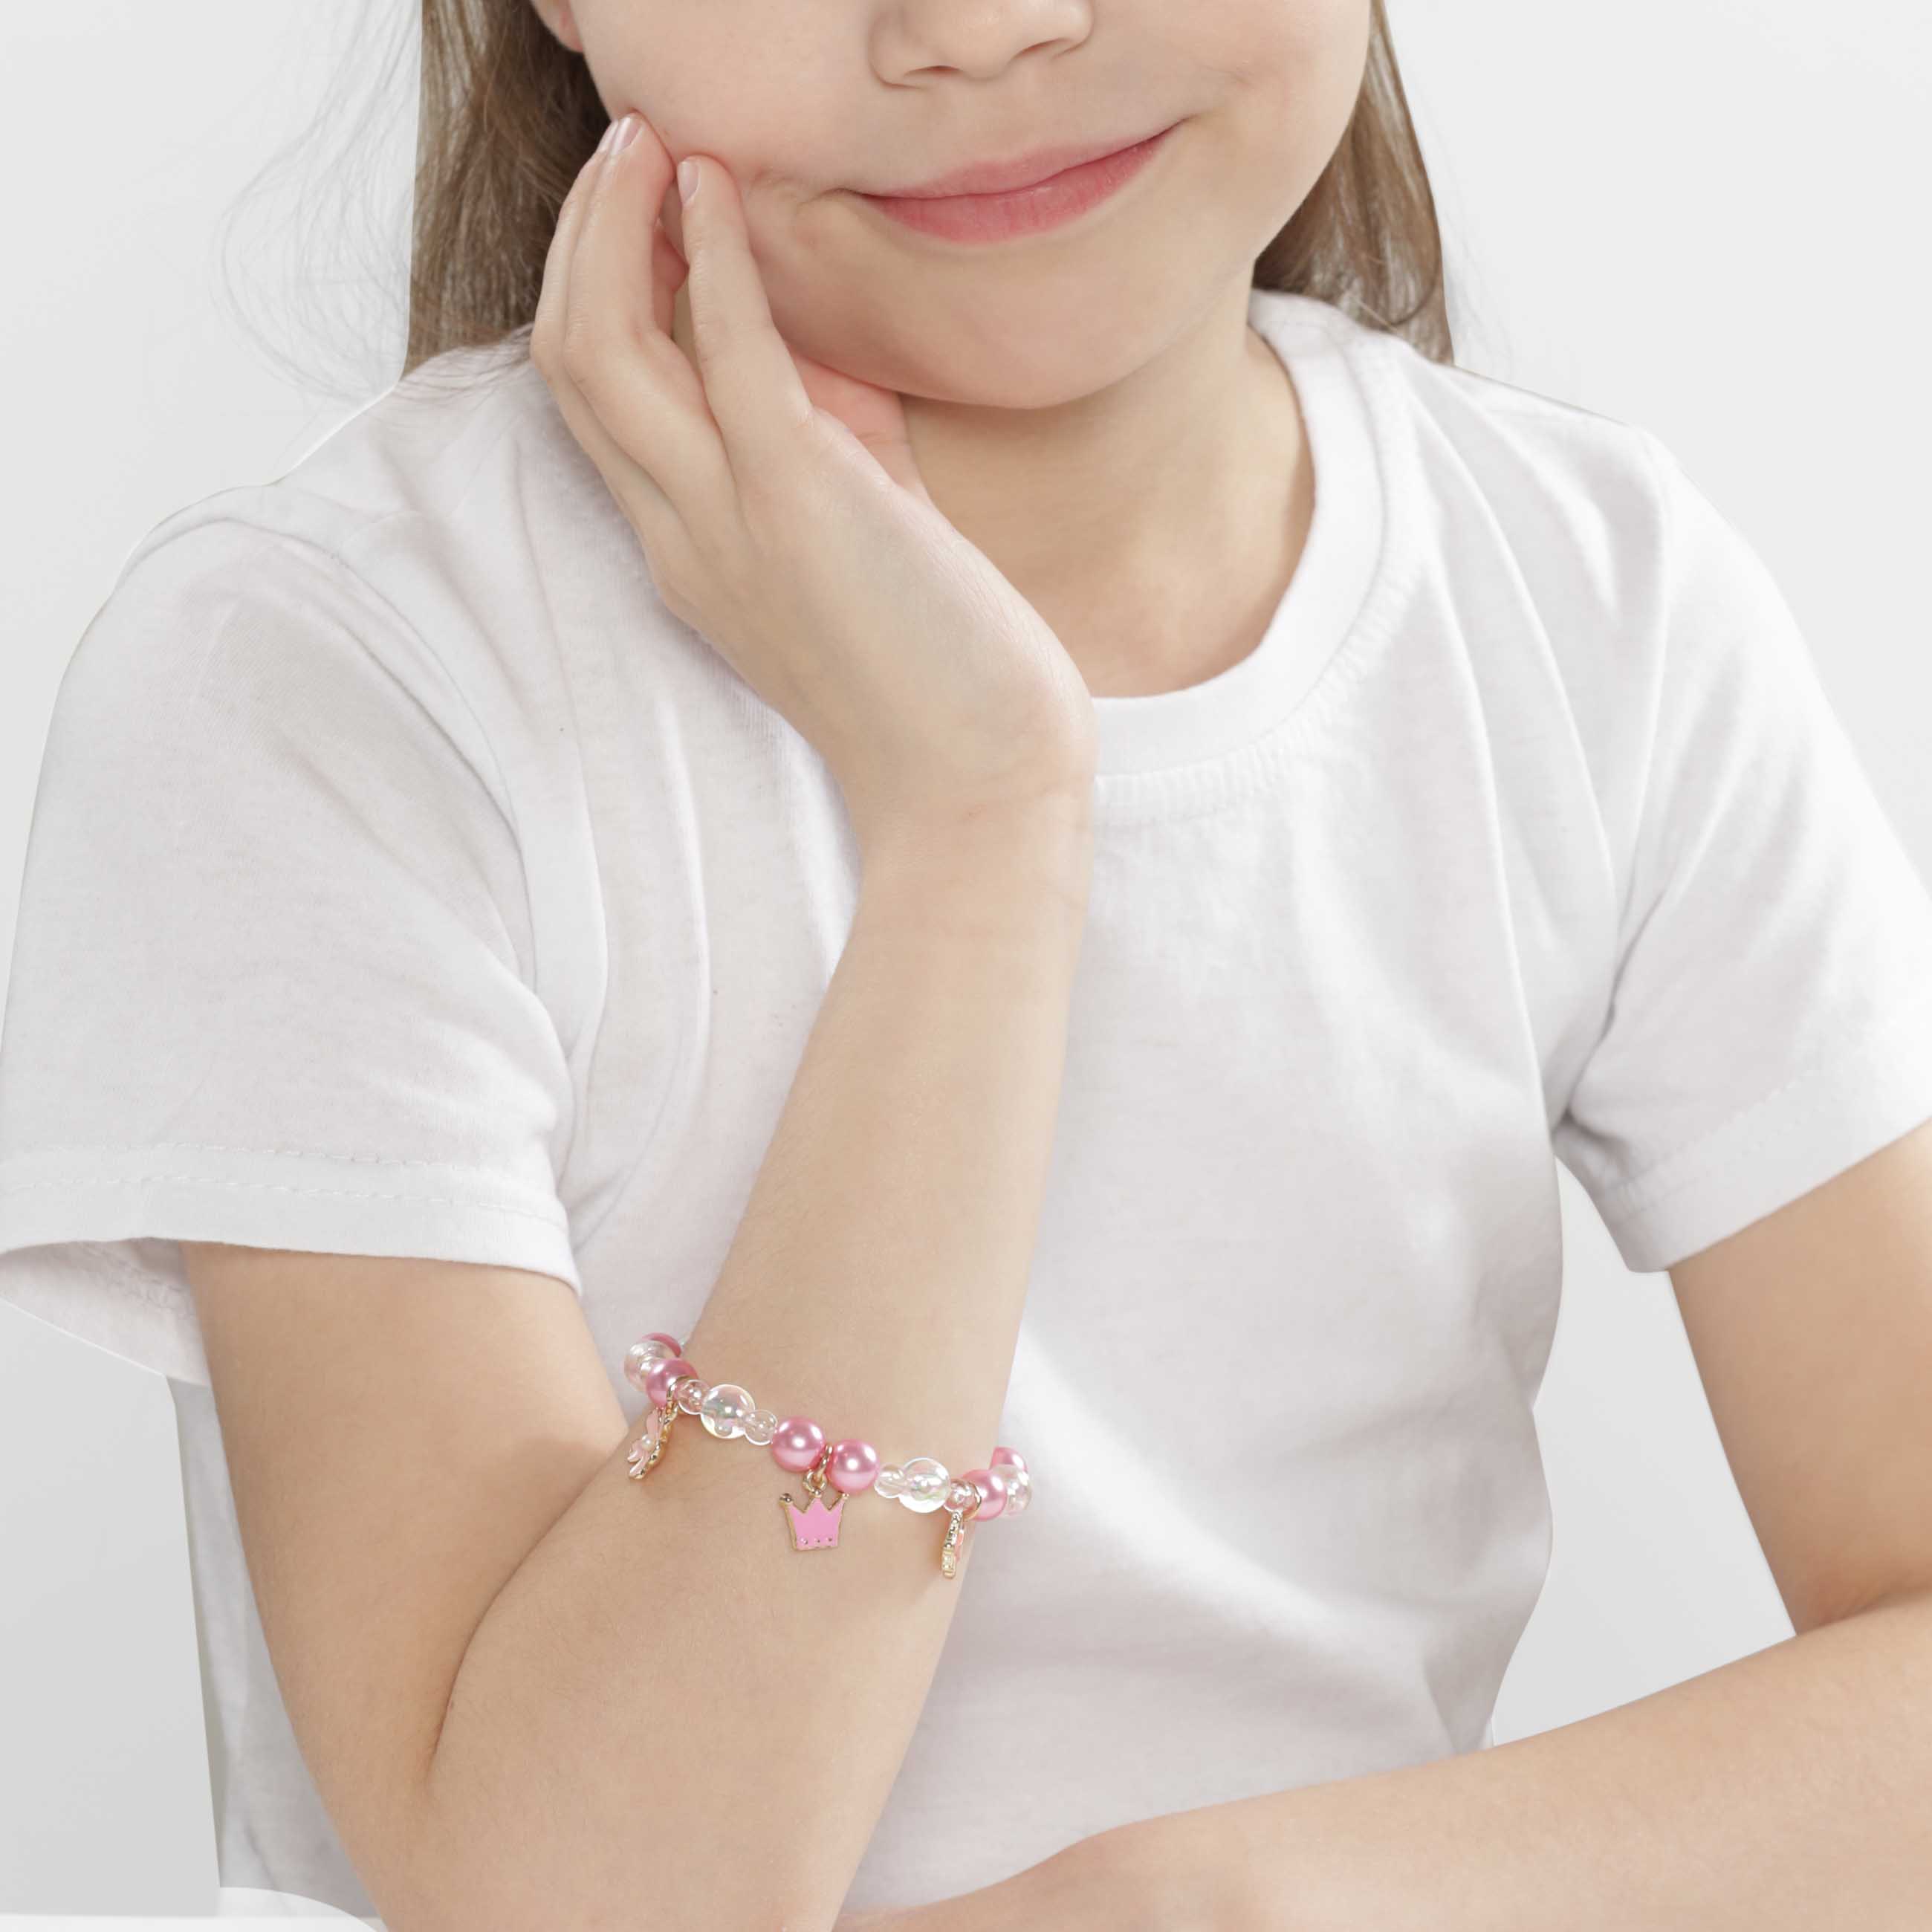 Bracelet, 8 cm, children's, with pendants, Plastic / metal, Pink, Crown, Jewelry изображение № 3